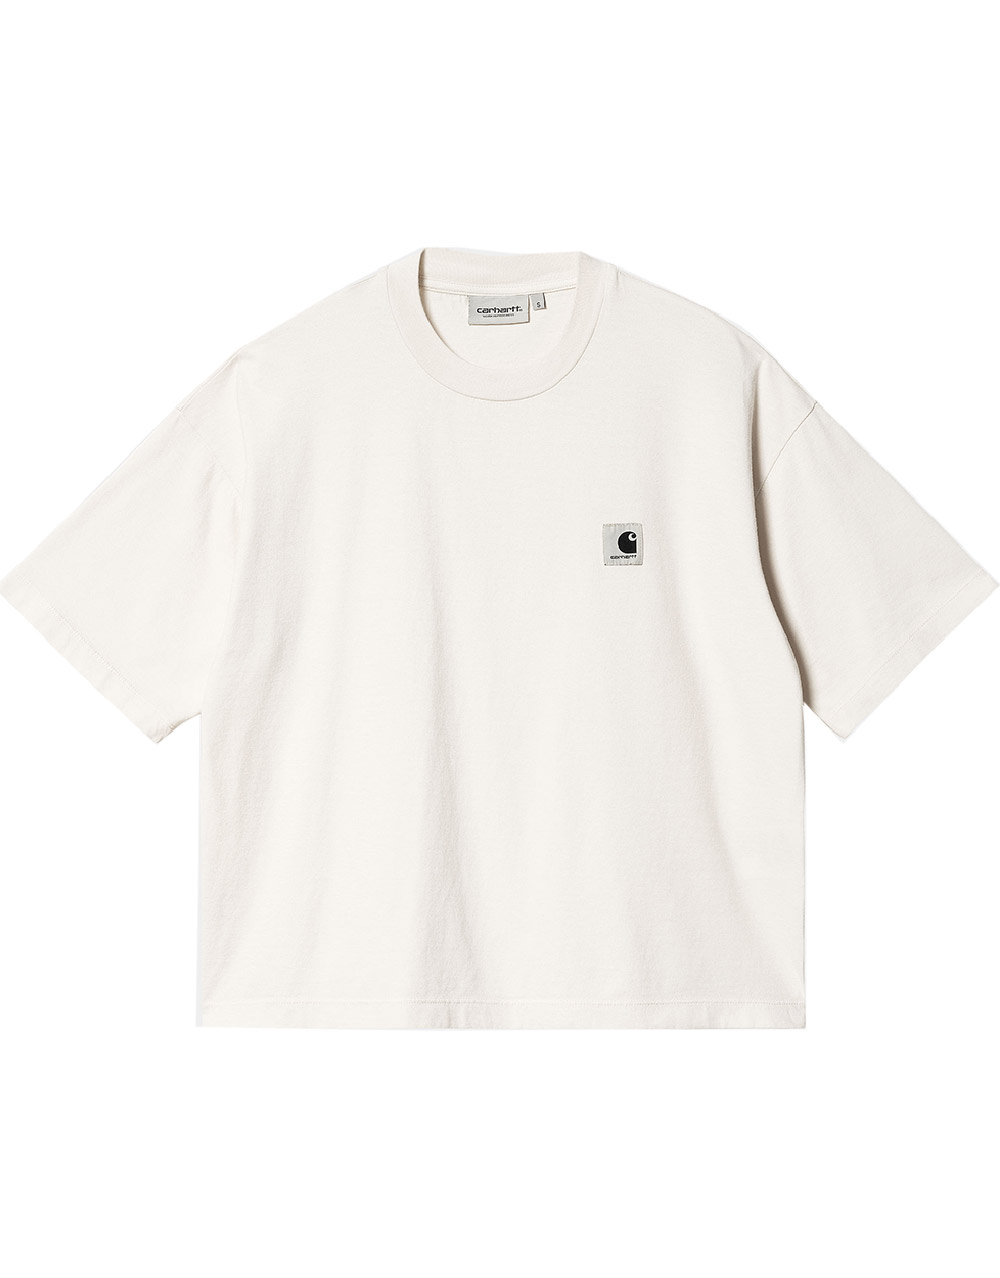 Carhartt WIP – W’ S/S Nelson T-Shirt